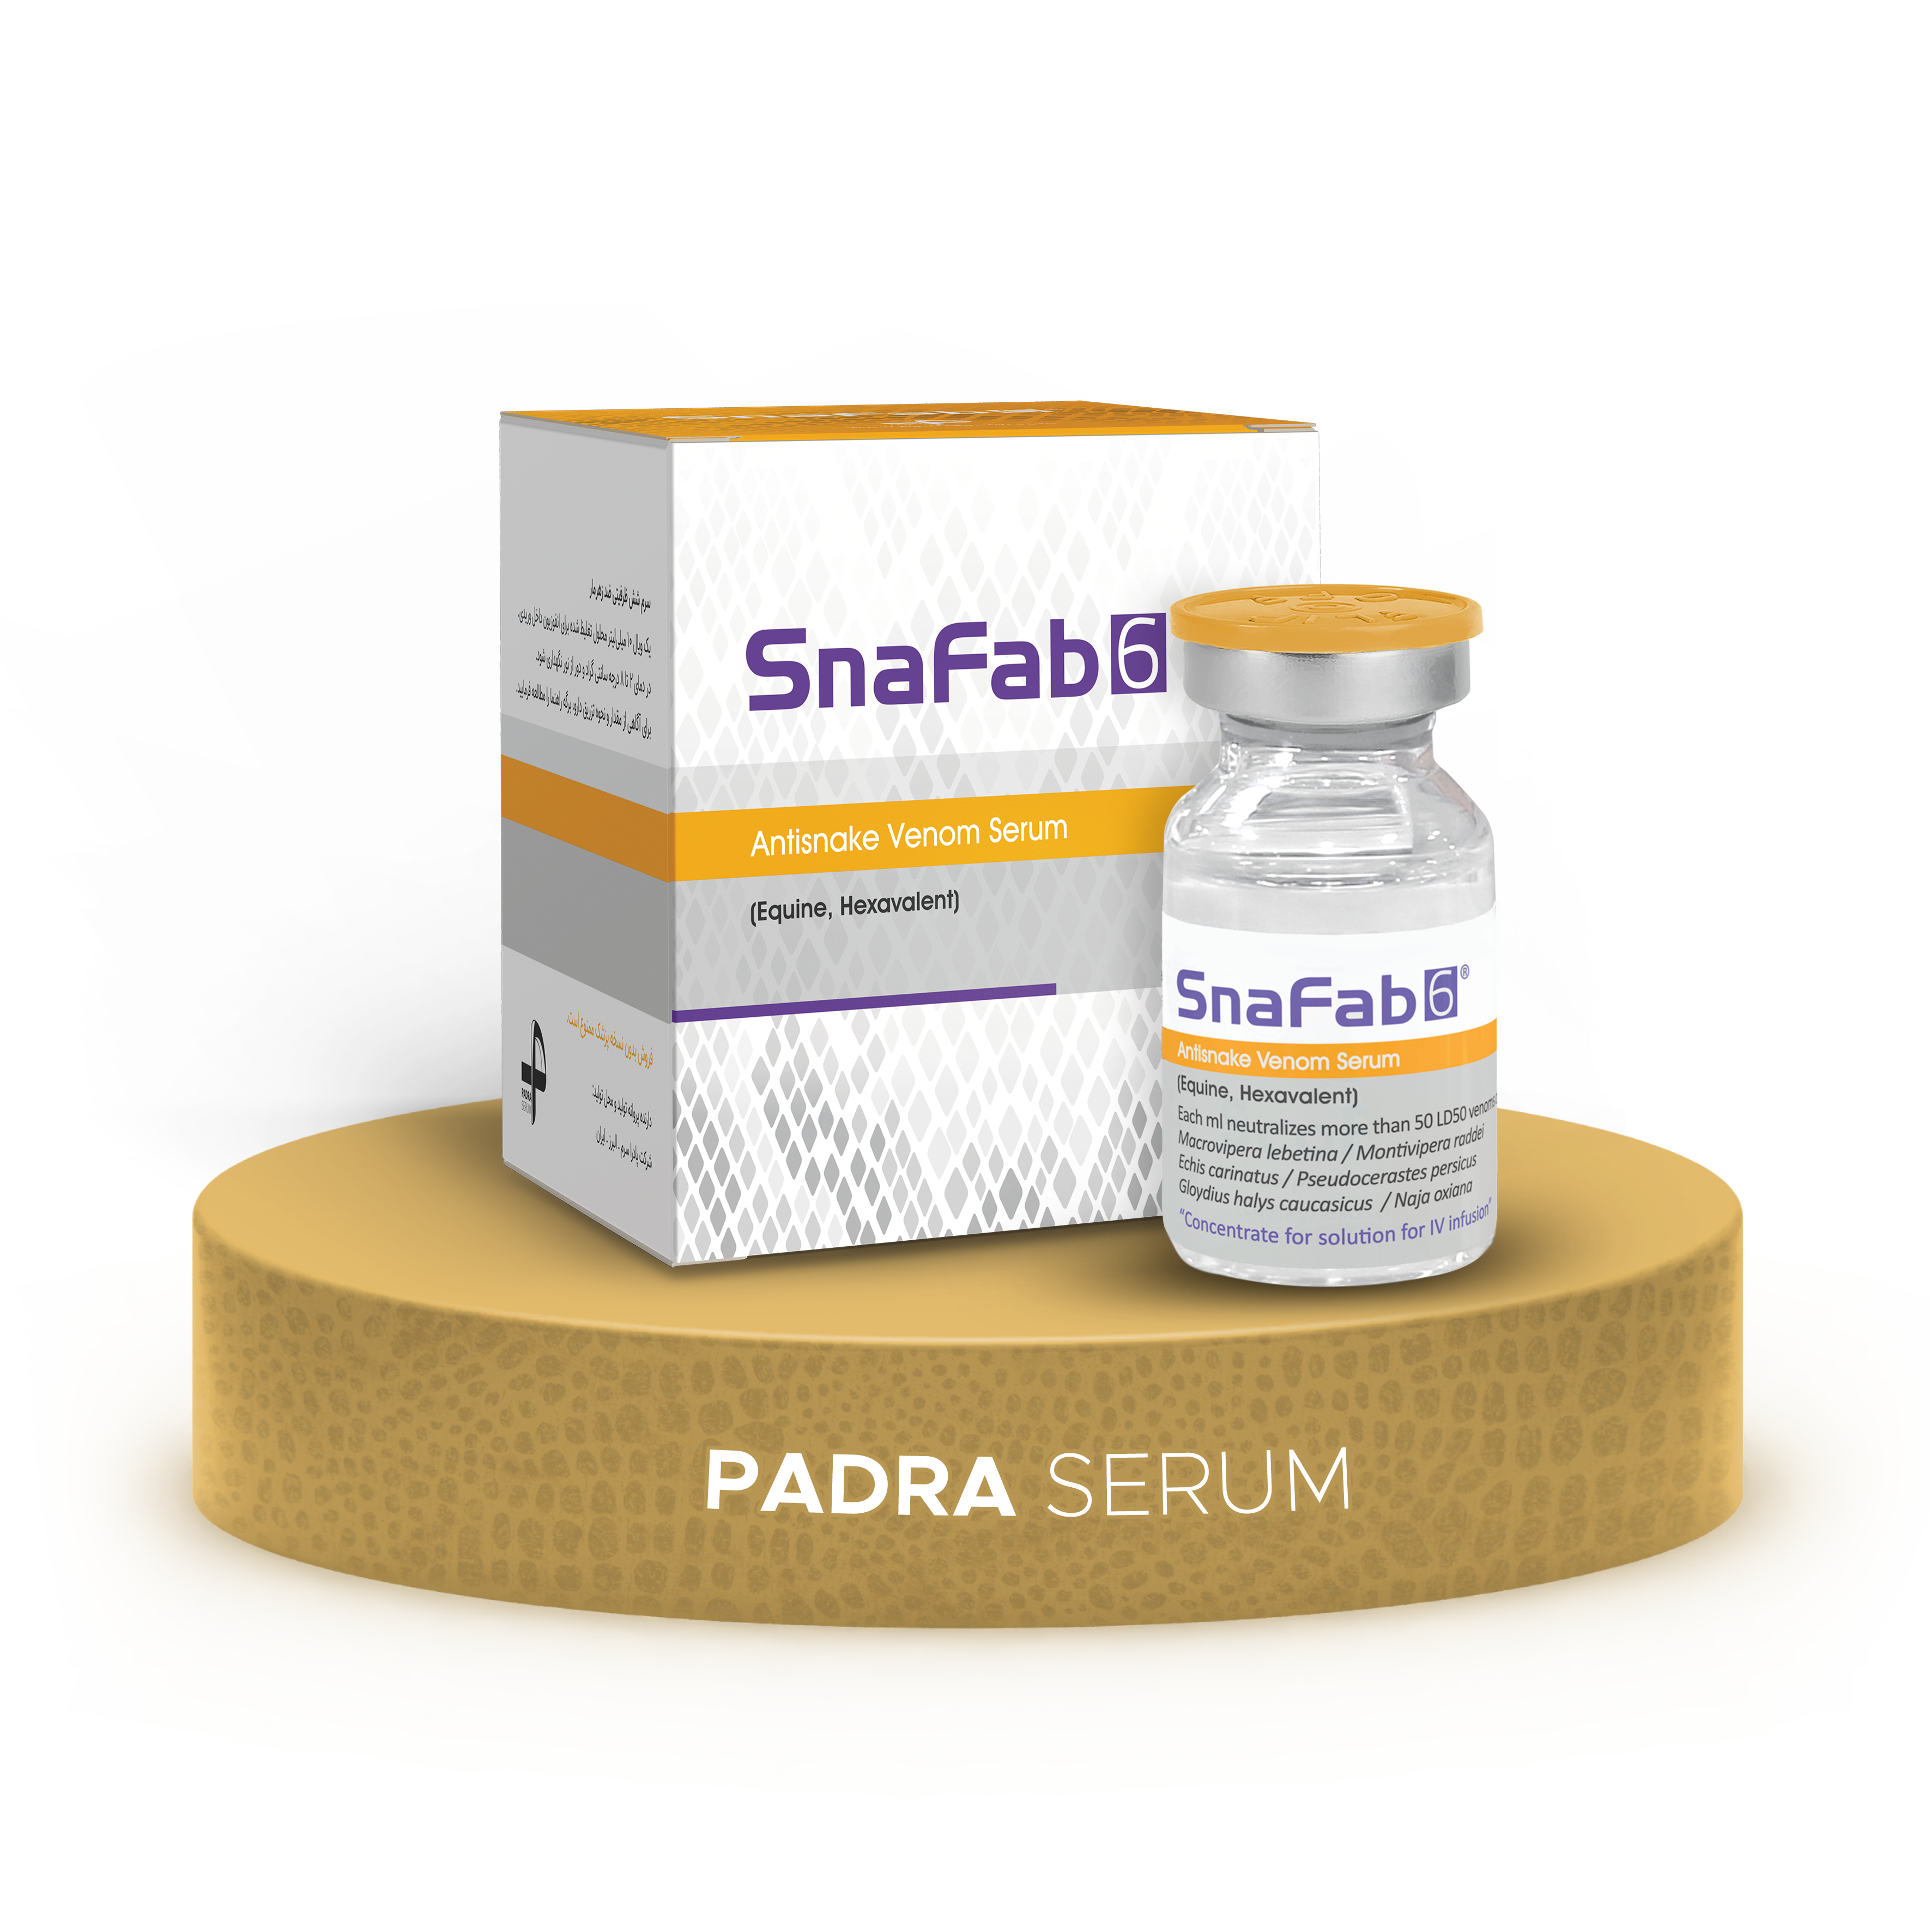 SnaFab Box & SnaFab Vial (Hexavalent, Equine, Antisnake Venom Serum) - اسنافب شش ظرفیتی و اسبی - پادزهر مار - پادرا سرم البرز - Padra Serum Alborz